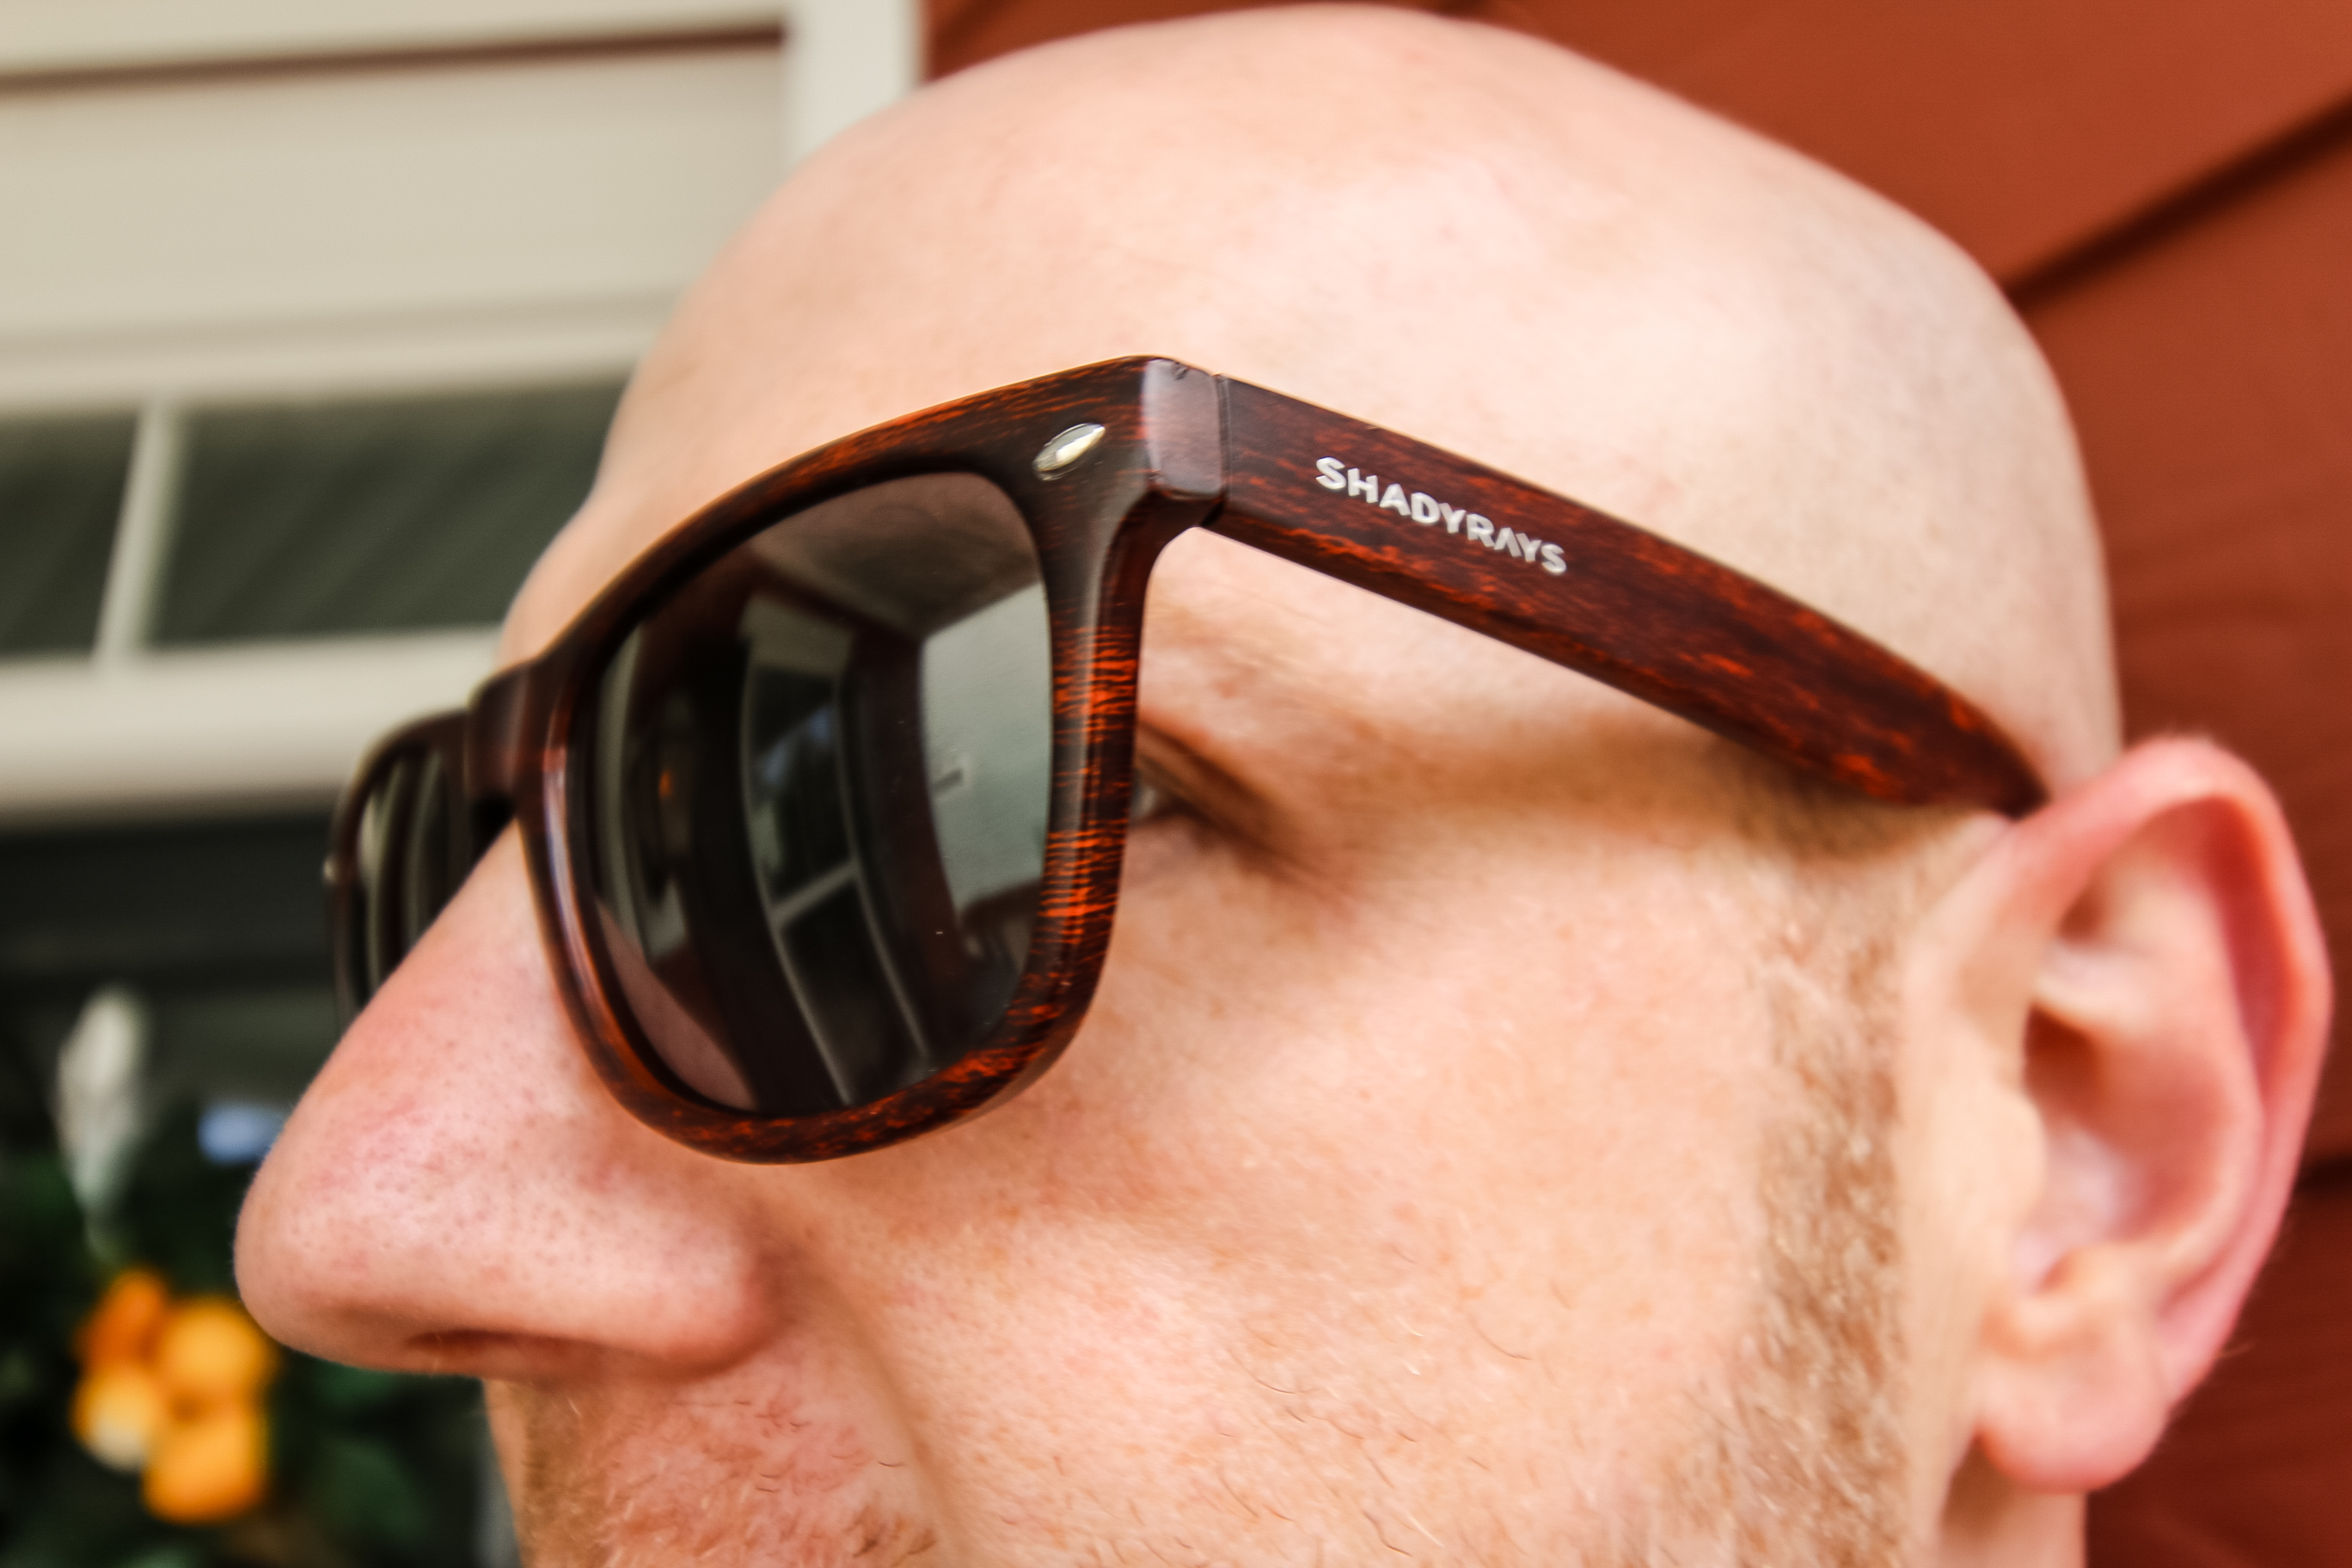 shady rays sunglasses on a man